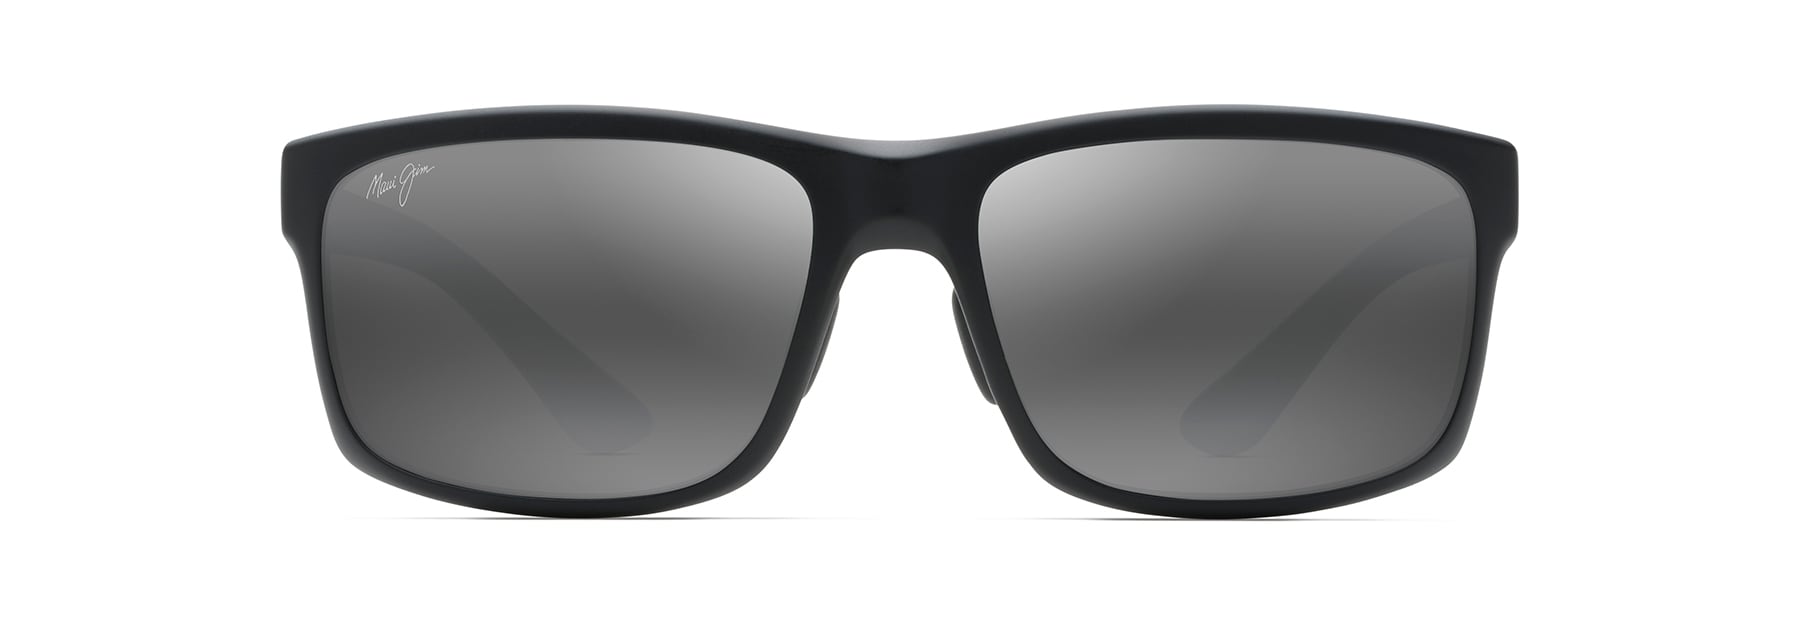 Pokowai Arch Polarized Sunglasses | Maui Jim®